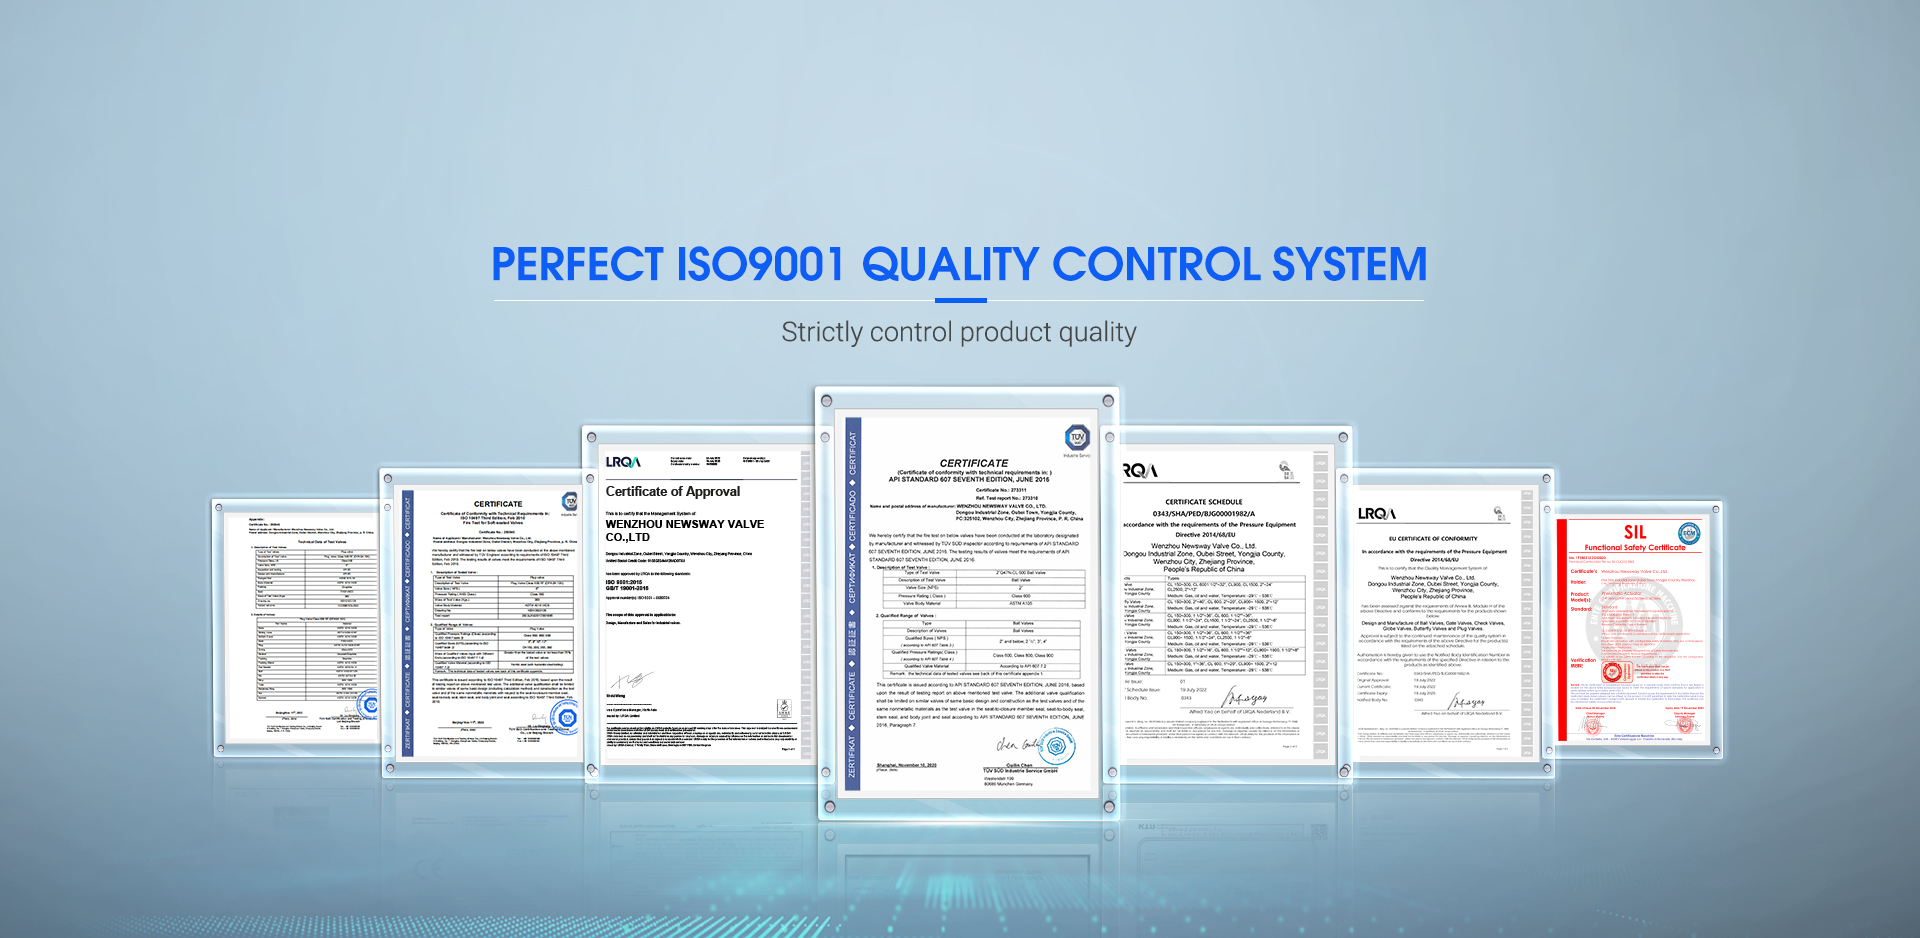 PERFEKT ISO9001 KVALITETSKONTROLLSYSTEM